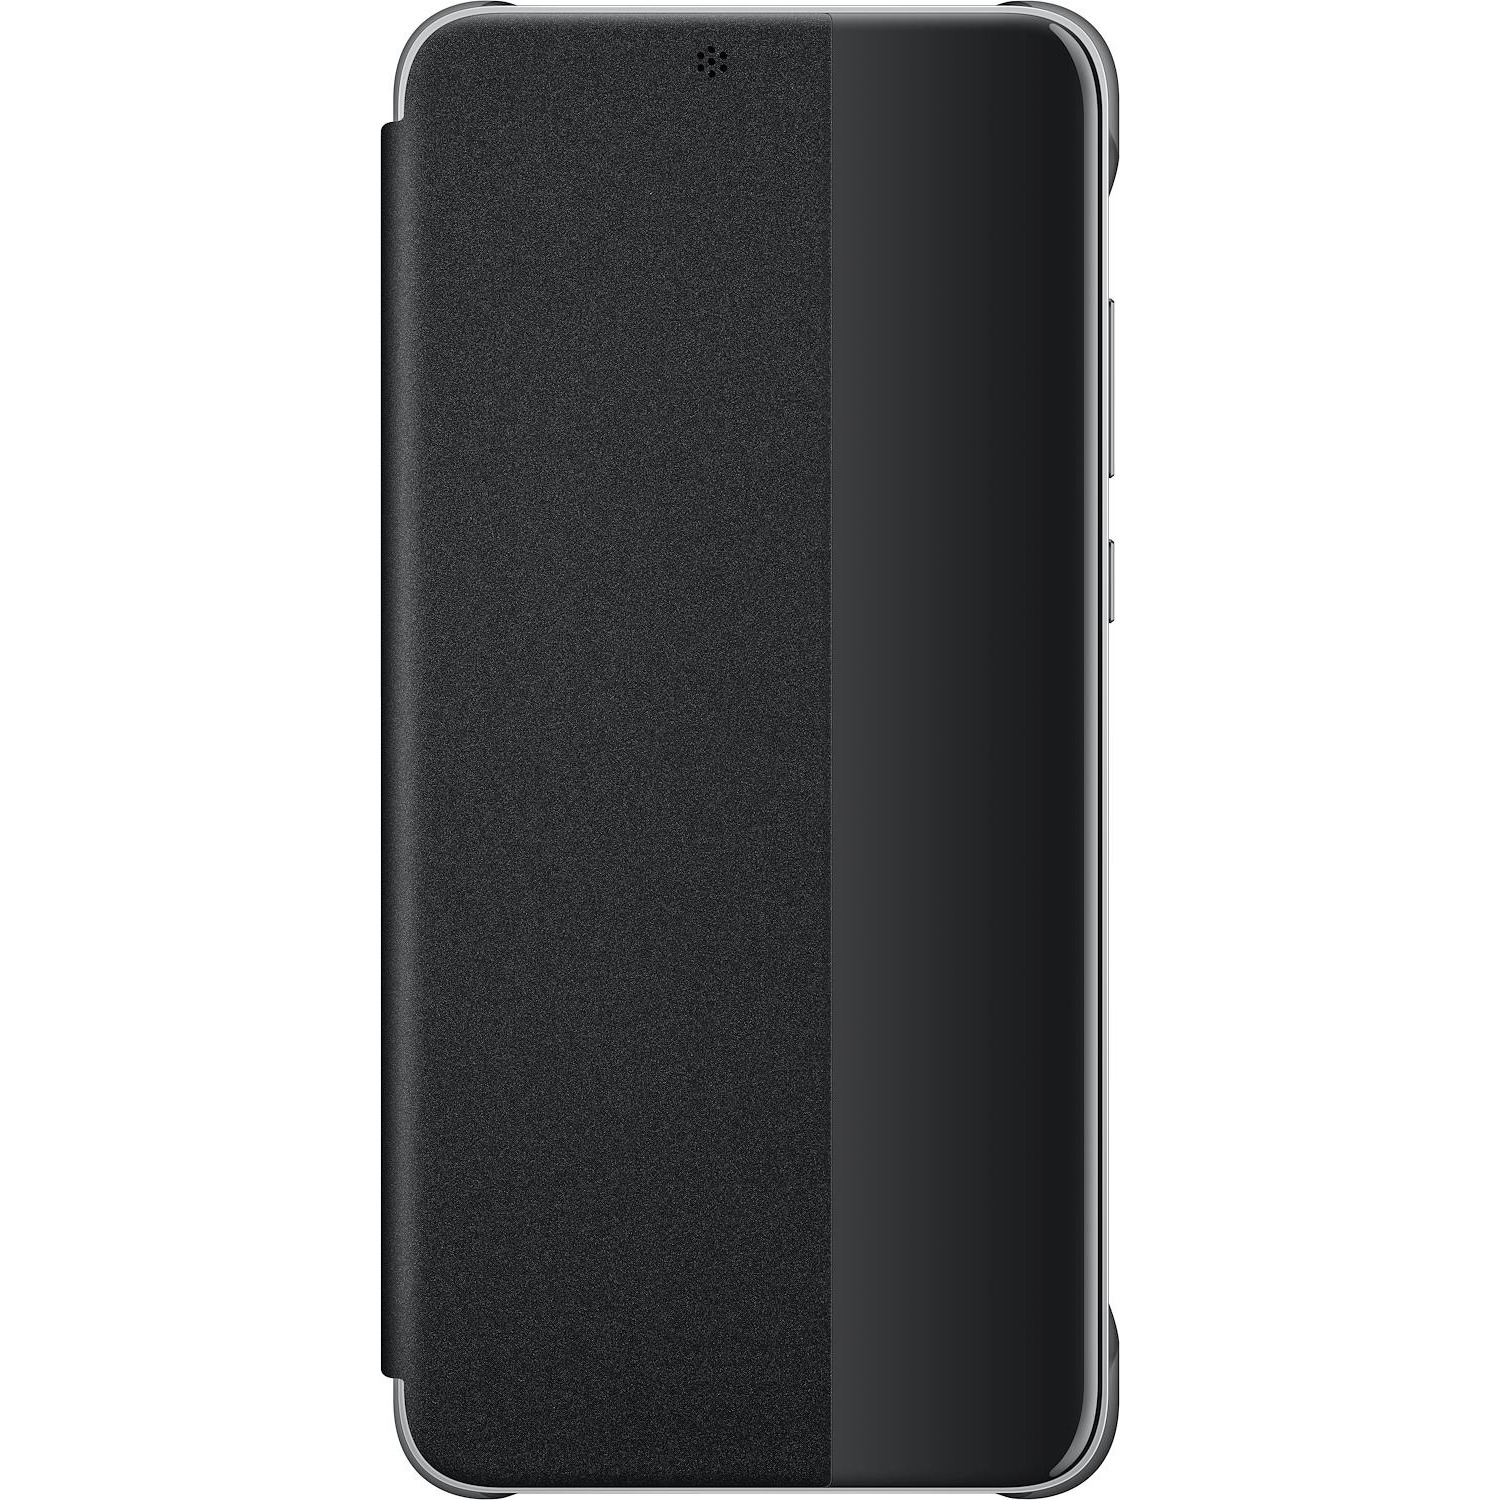 Immagine per Smart Flip Case per Huawei P20 Pro colore black da DIMOStore